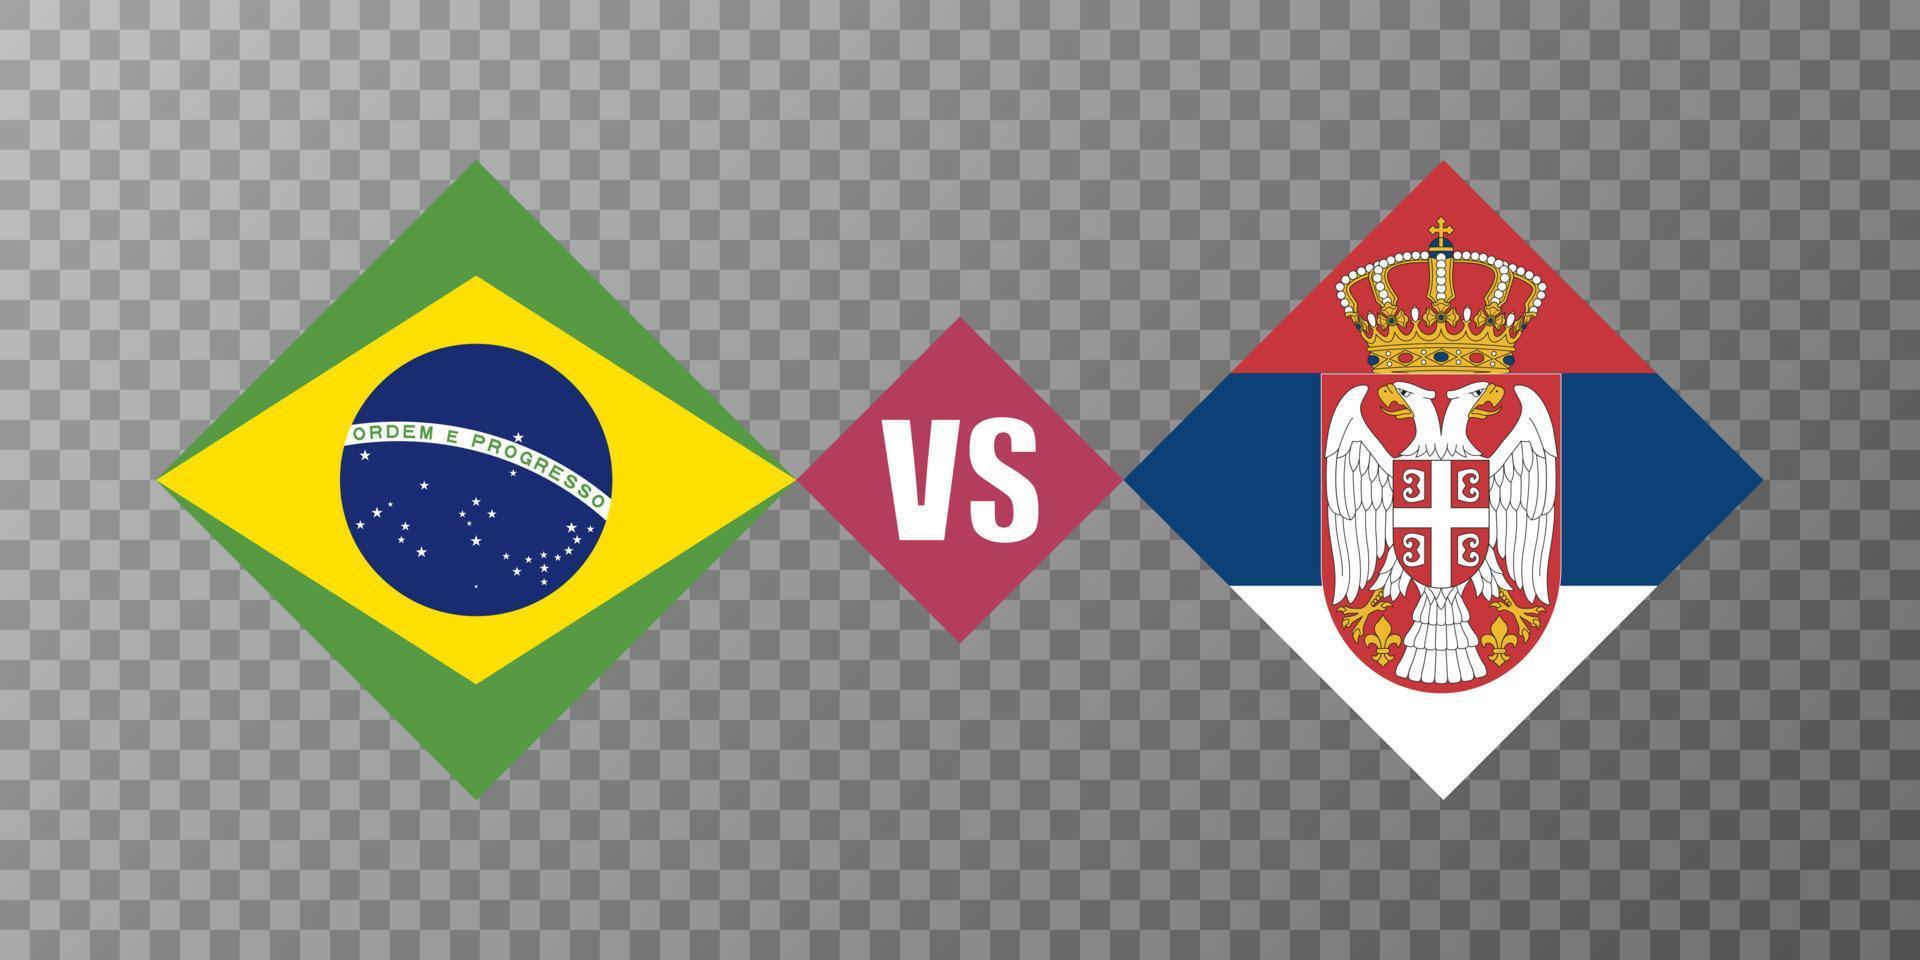 Brazil vs Serbia flag concept. Vector illustration.